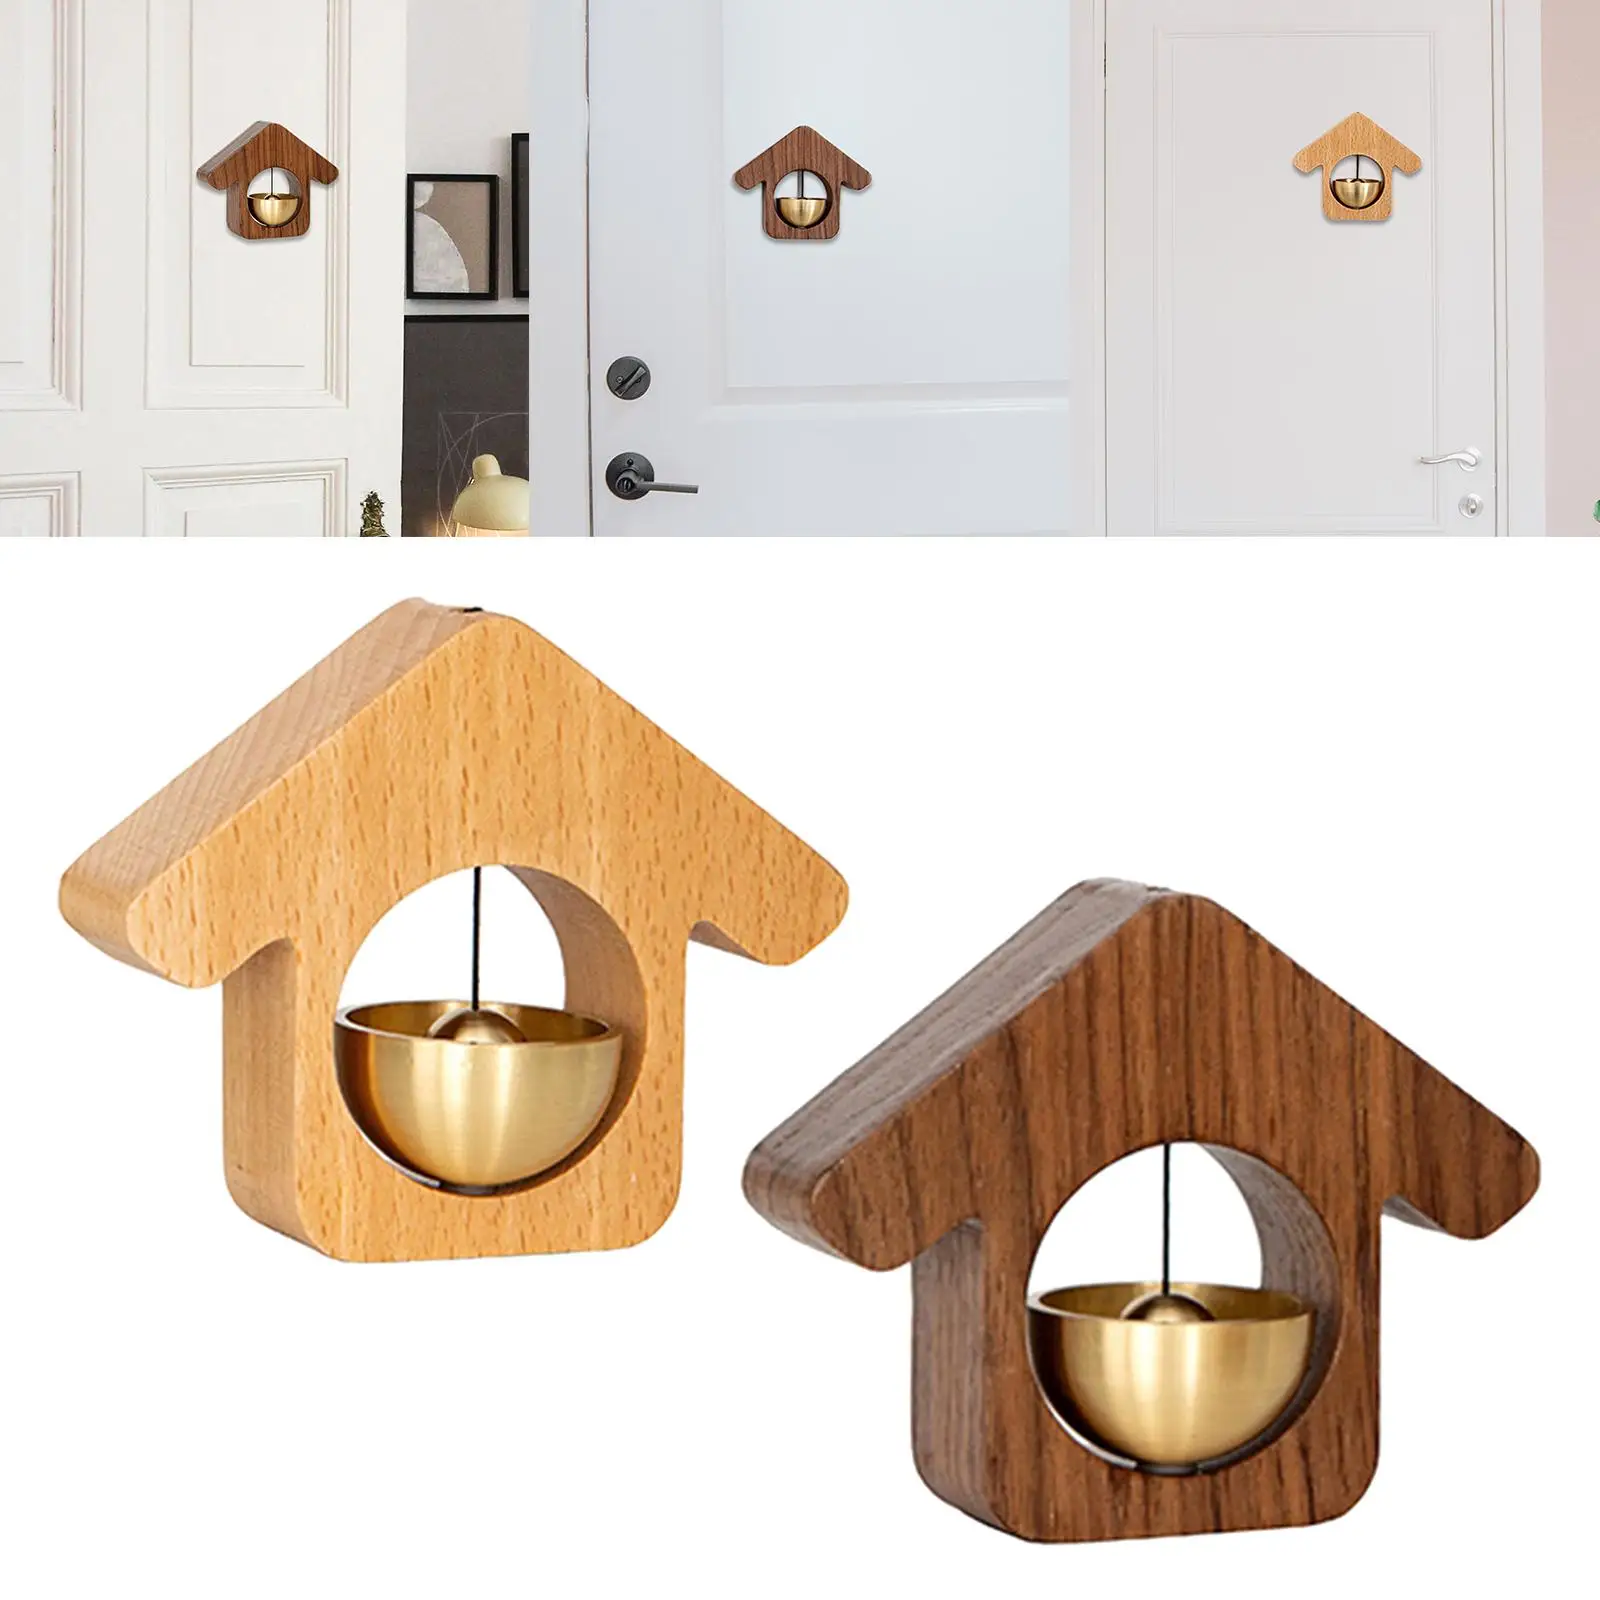 2pcs Wood Shopkeepers Bell Gate Bell Chime for Fridge Barn Door